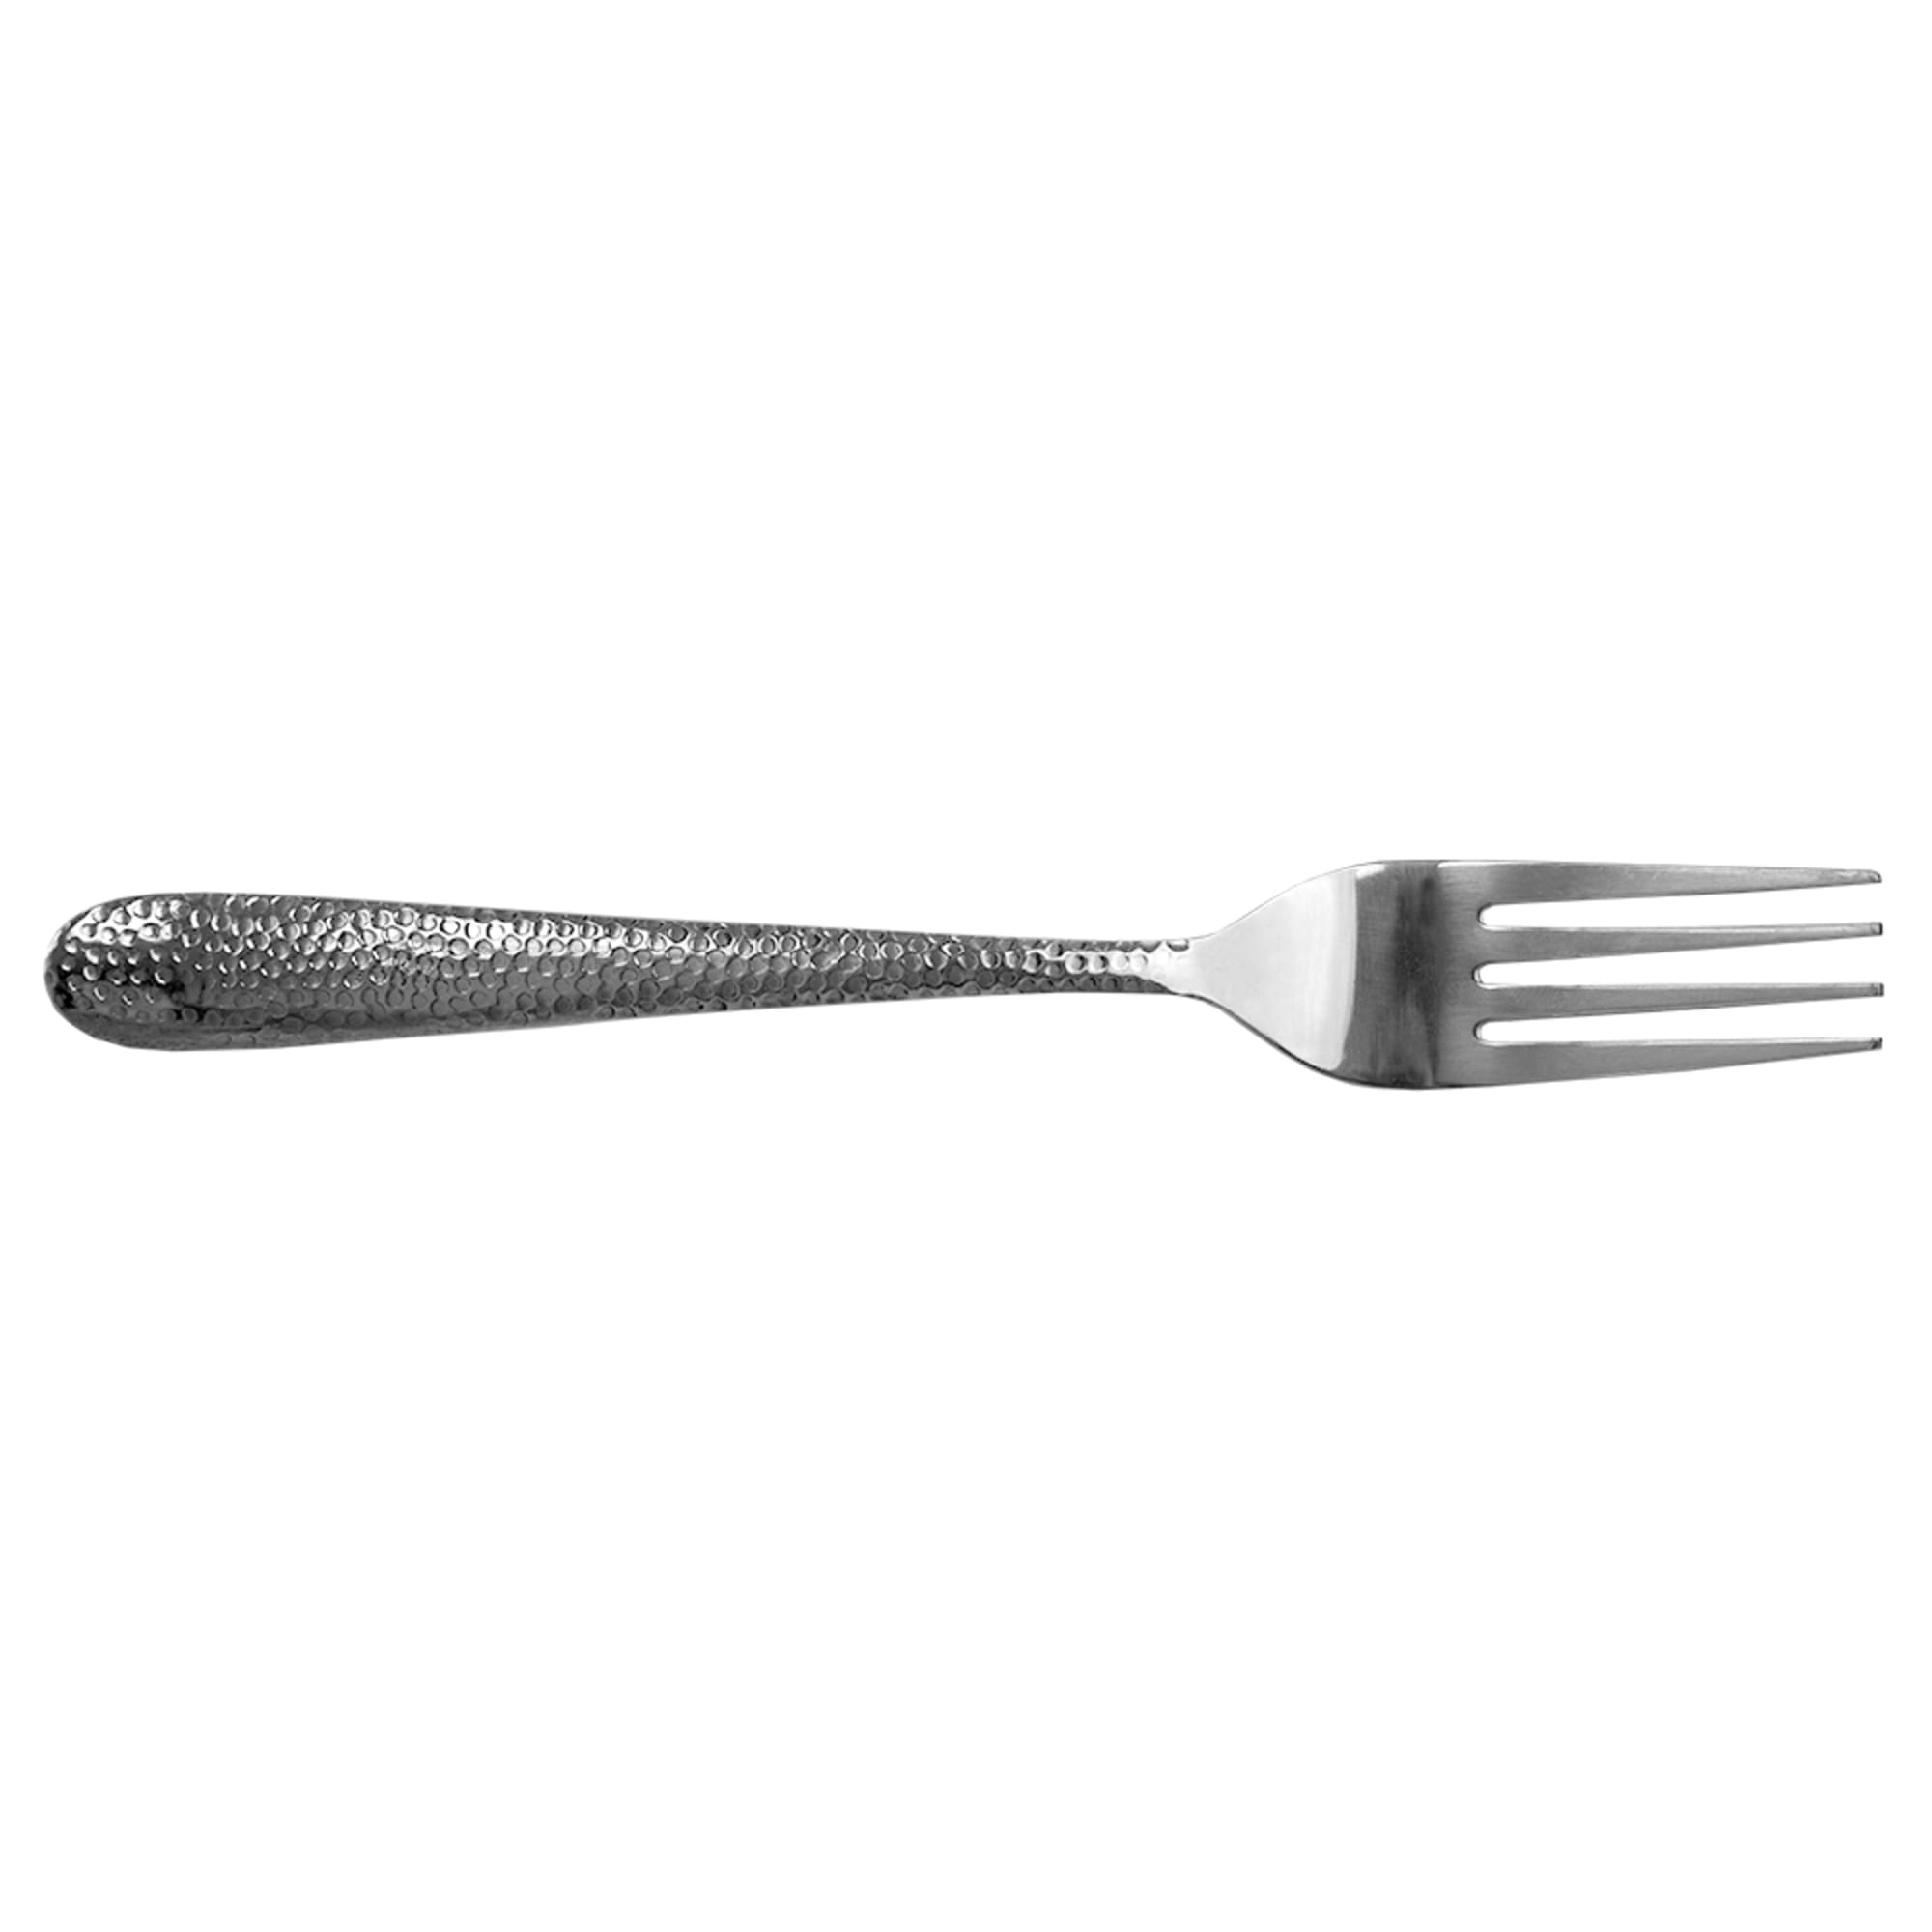 Hammered Silver 4-Piece Dinner Fork Set - Stainless Steel Flatware Dinner Utensils, Essential Kitchen Cutlery Set, Dishwasher Safe $2.00 EACH, CASE PACK OF 24